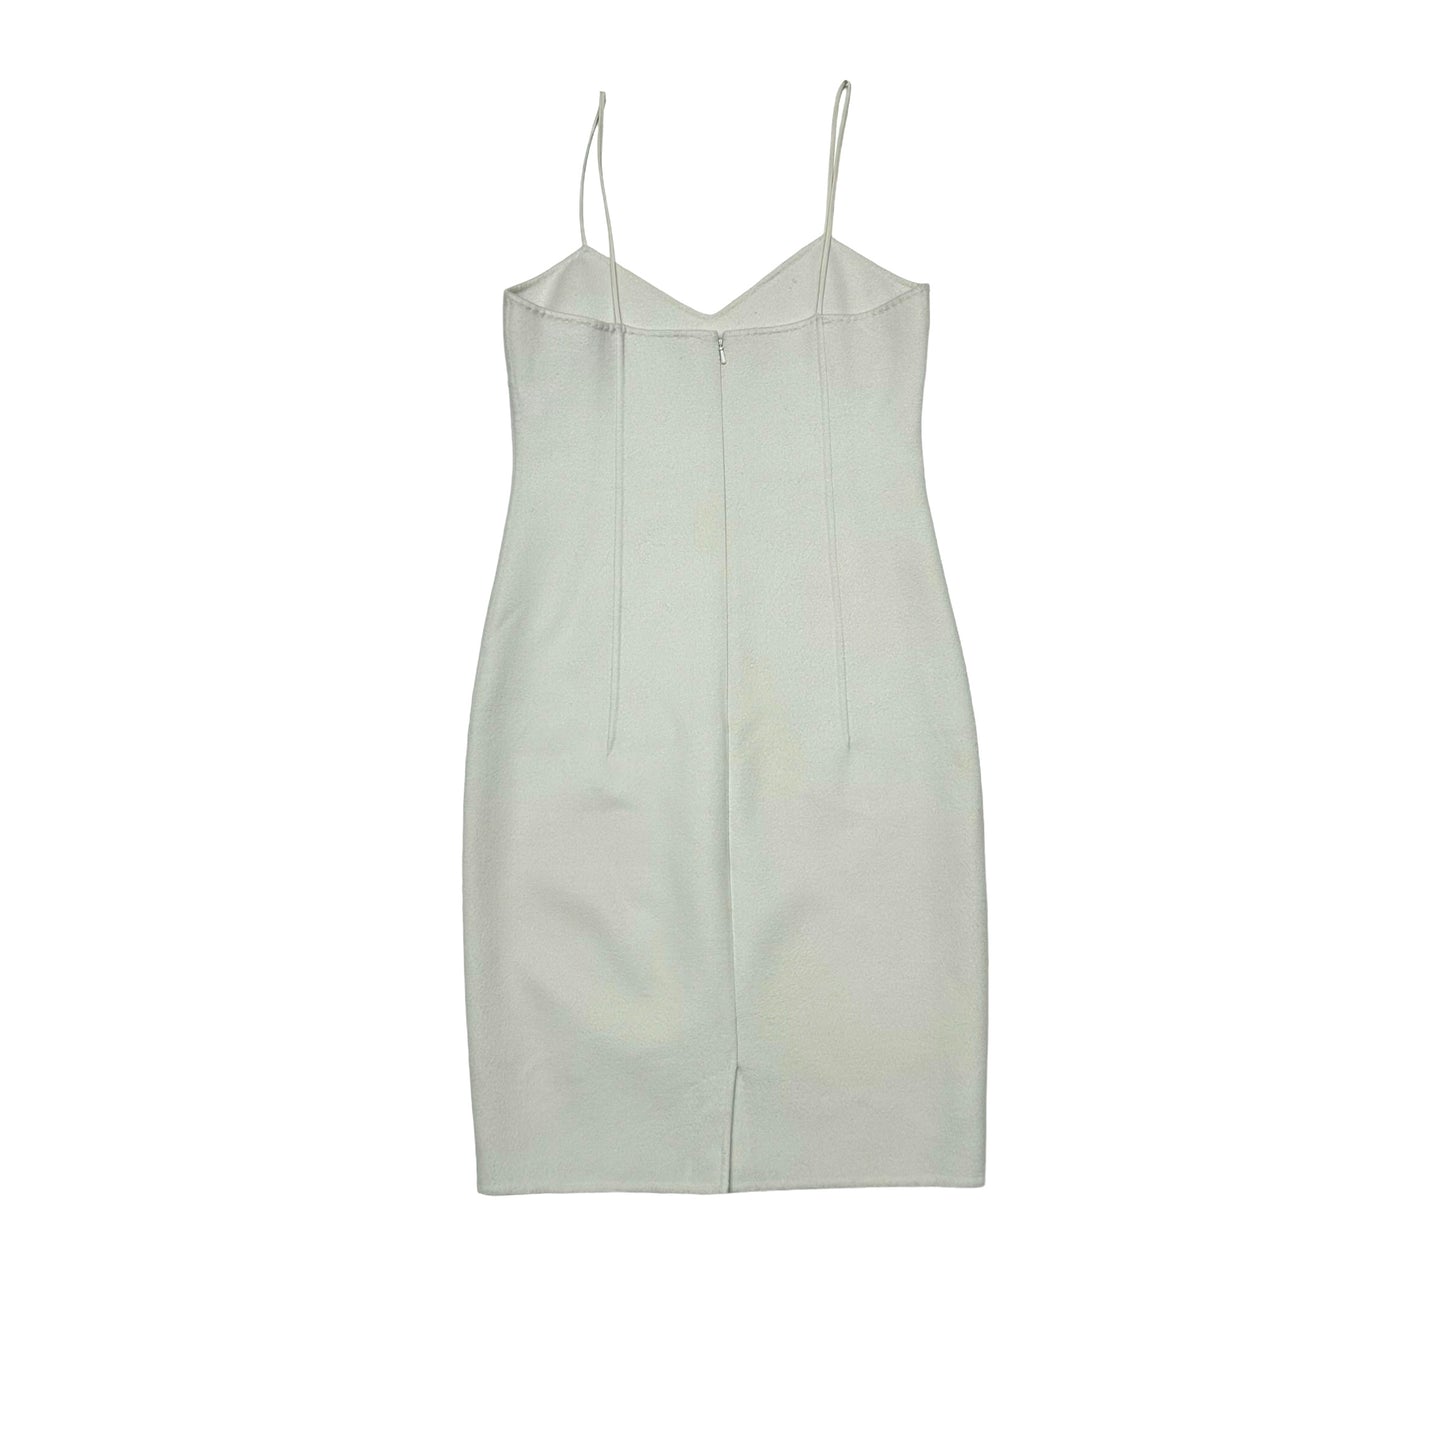 White Cashmere Dress - S/M